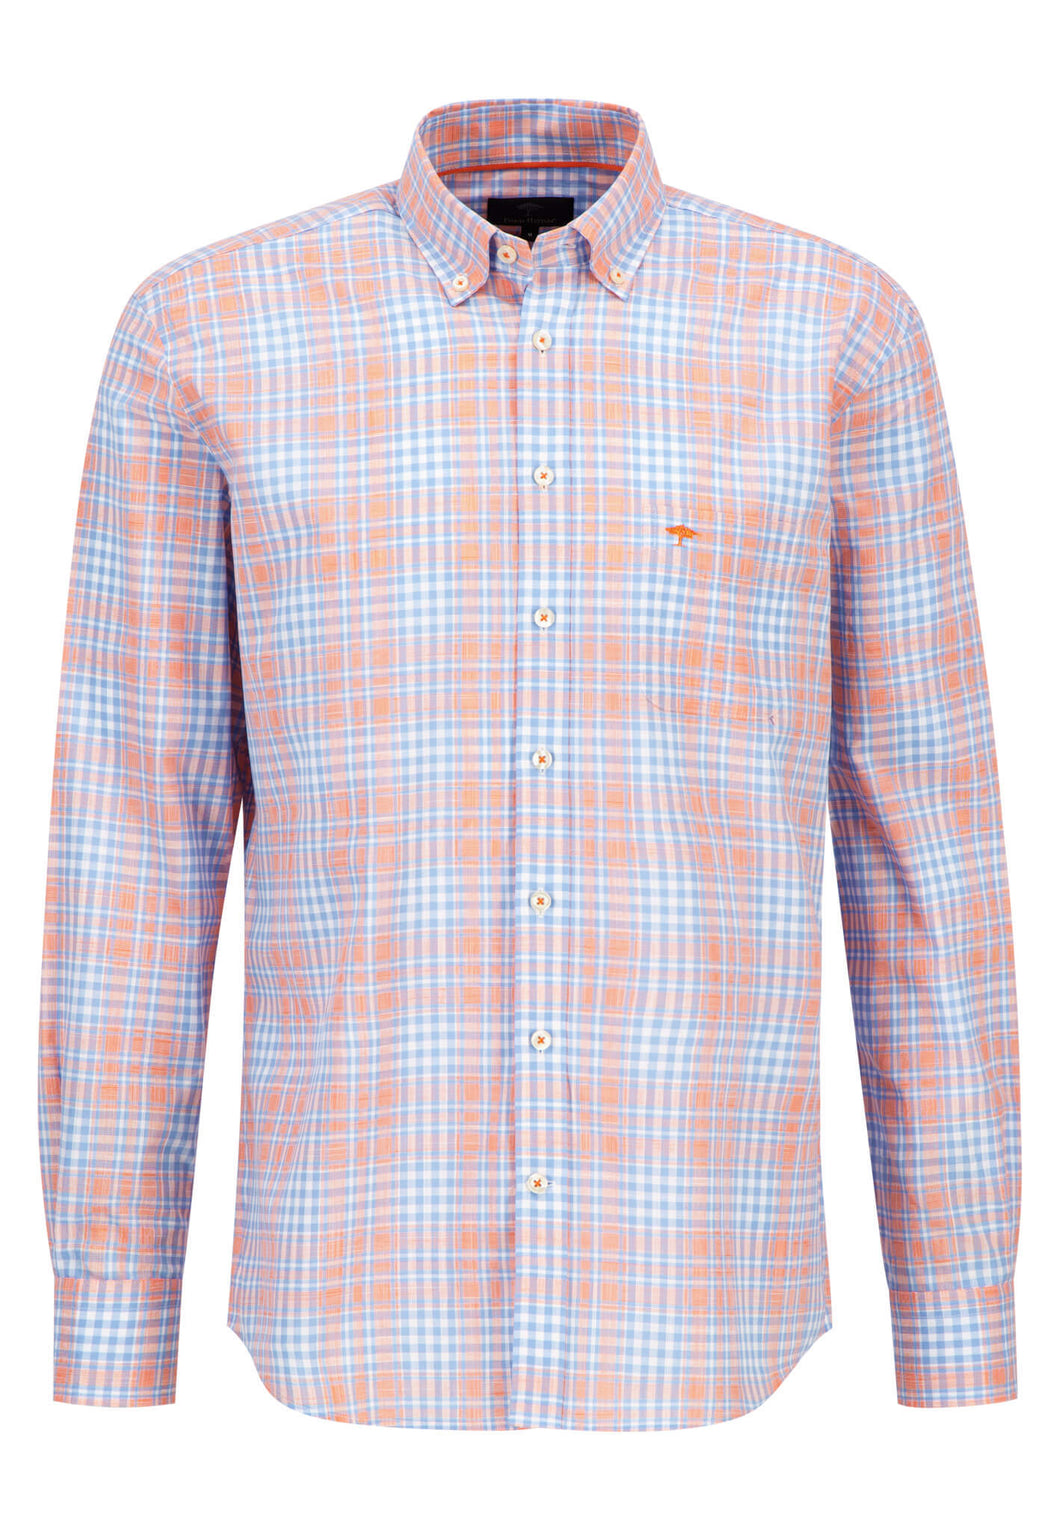 Fynch-Hatton Check Shirt Blue and Orange 13038110